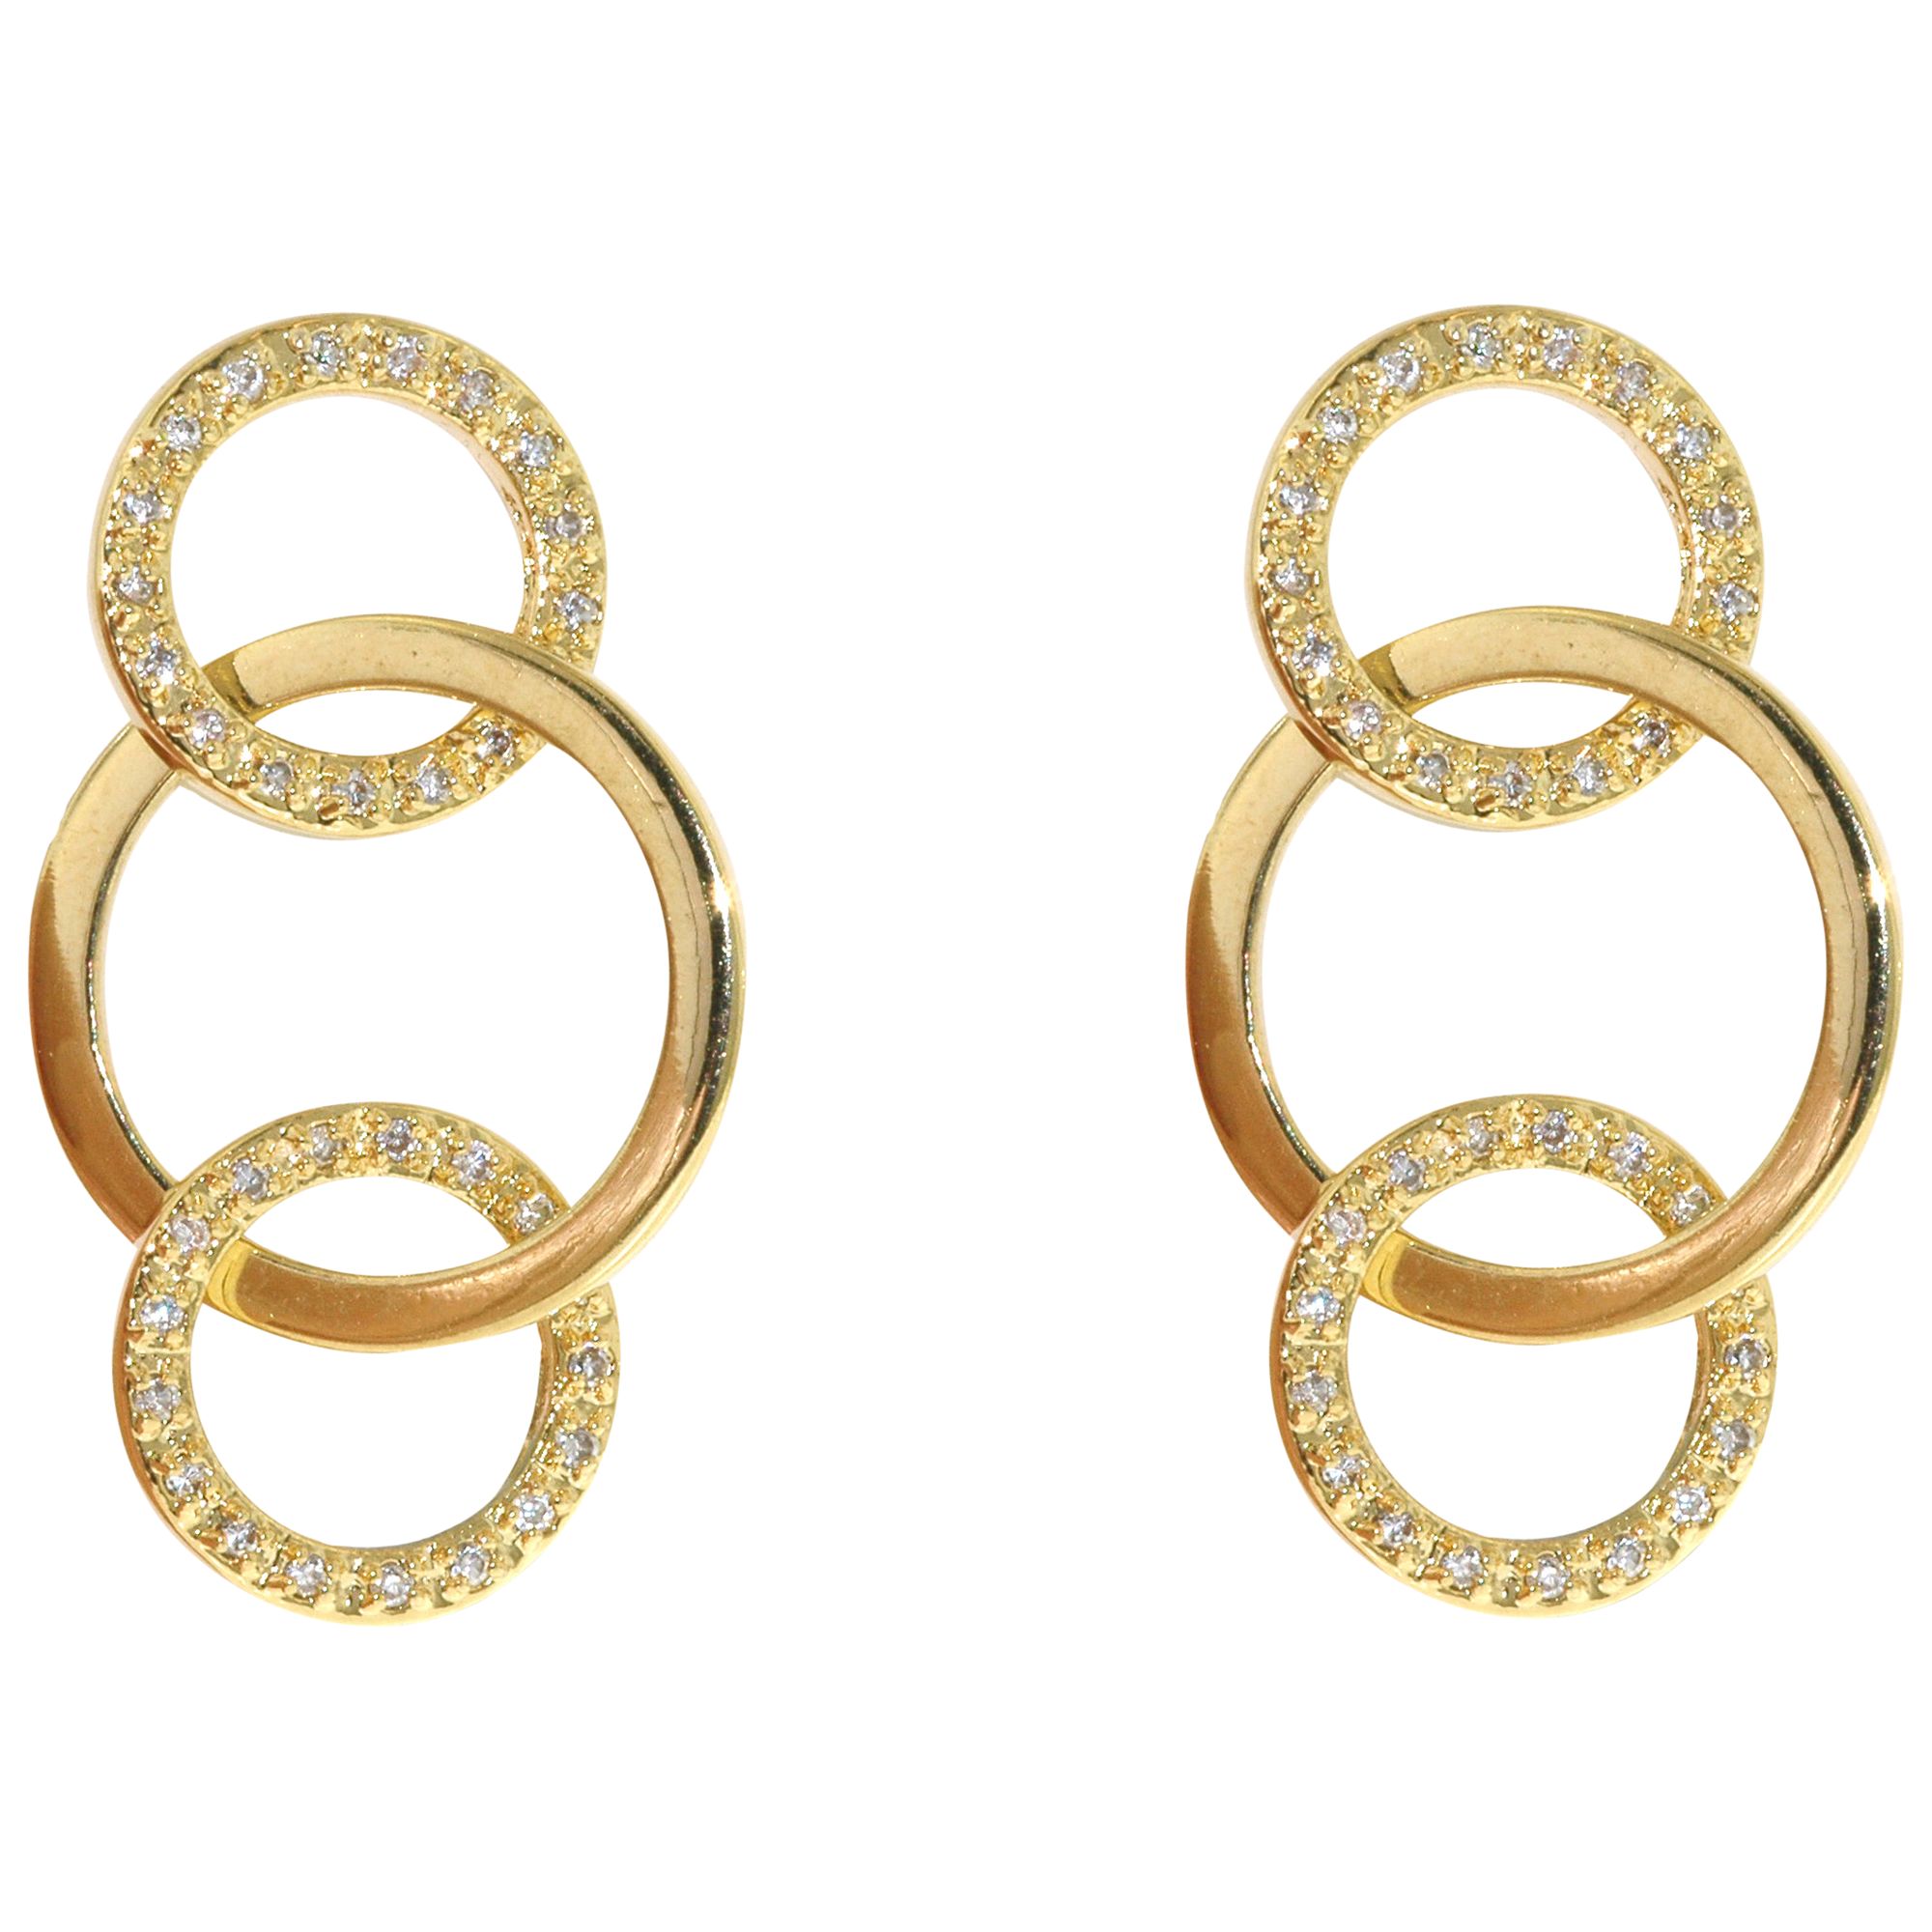 Melissa Odabash Triple Crystal Set Hoop Drop Earrings, Gold Plated